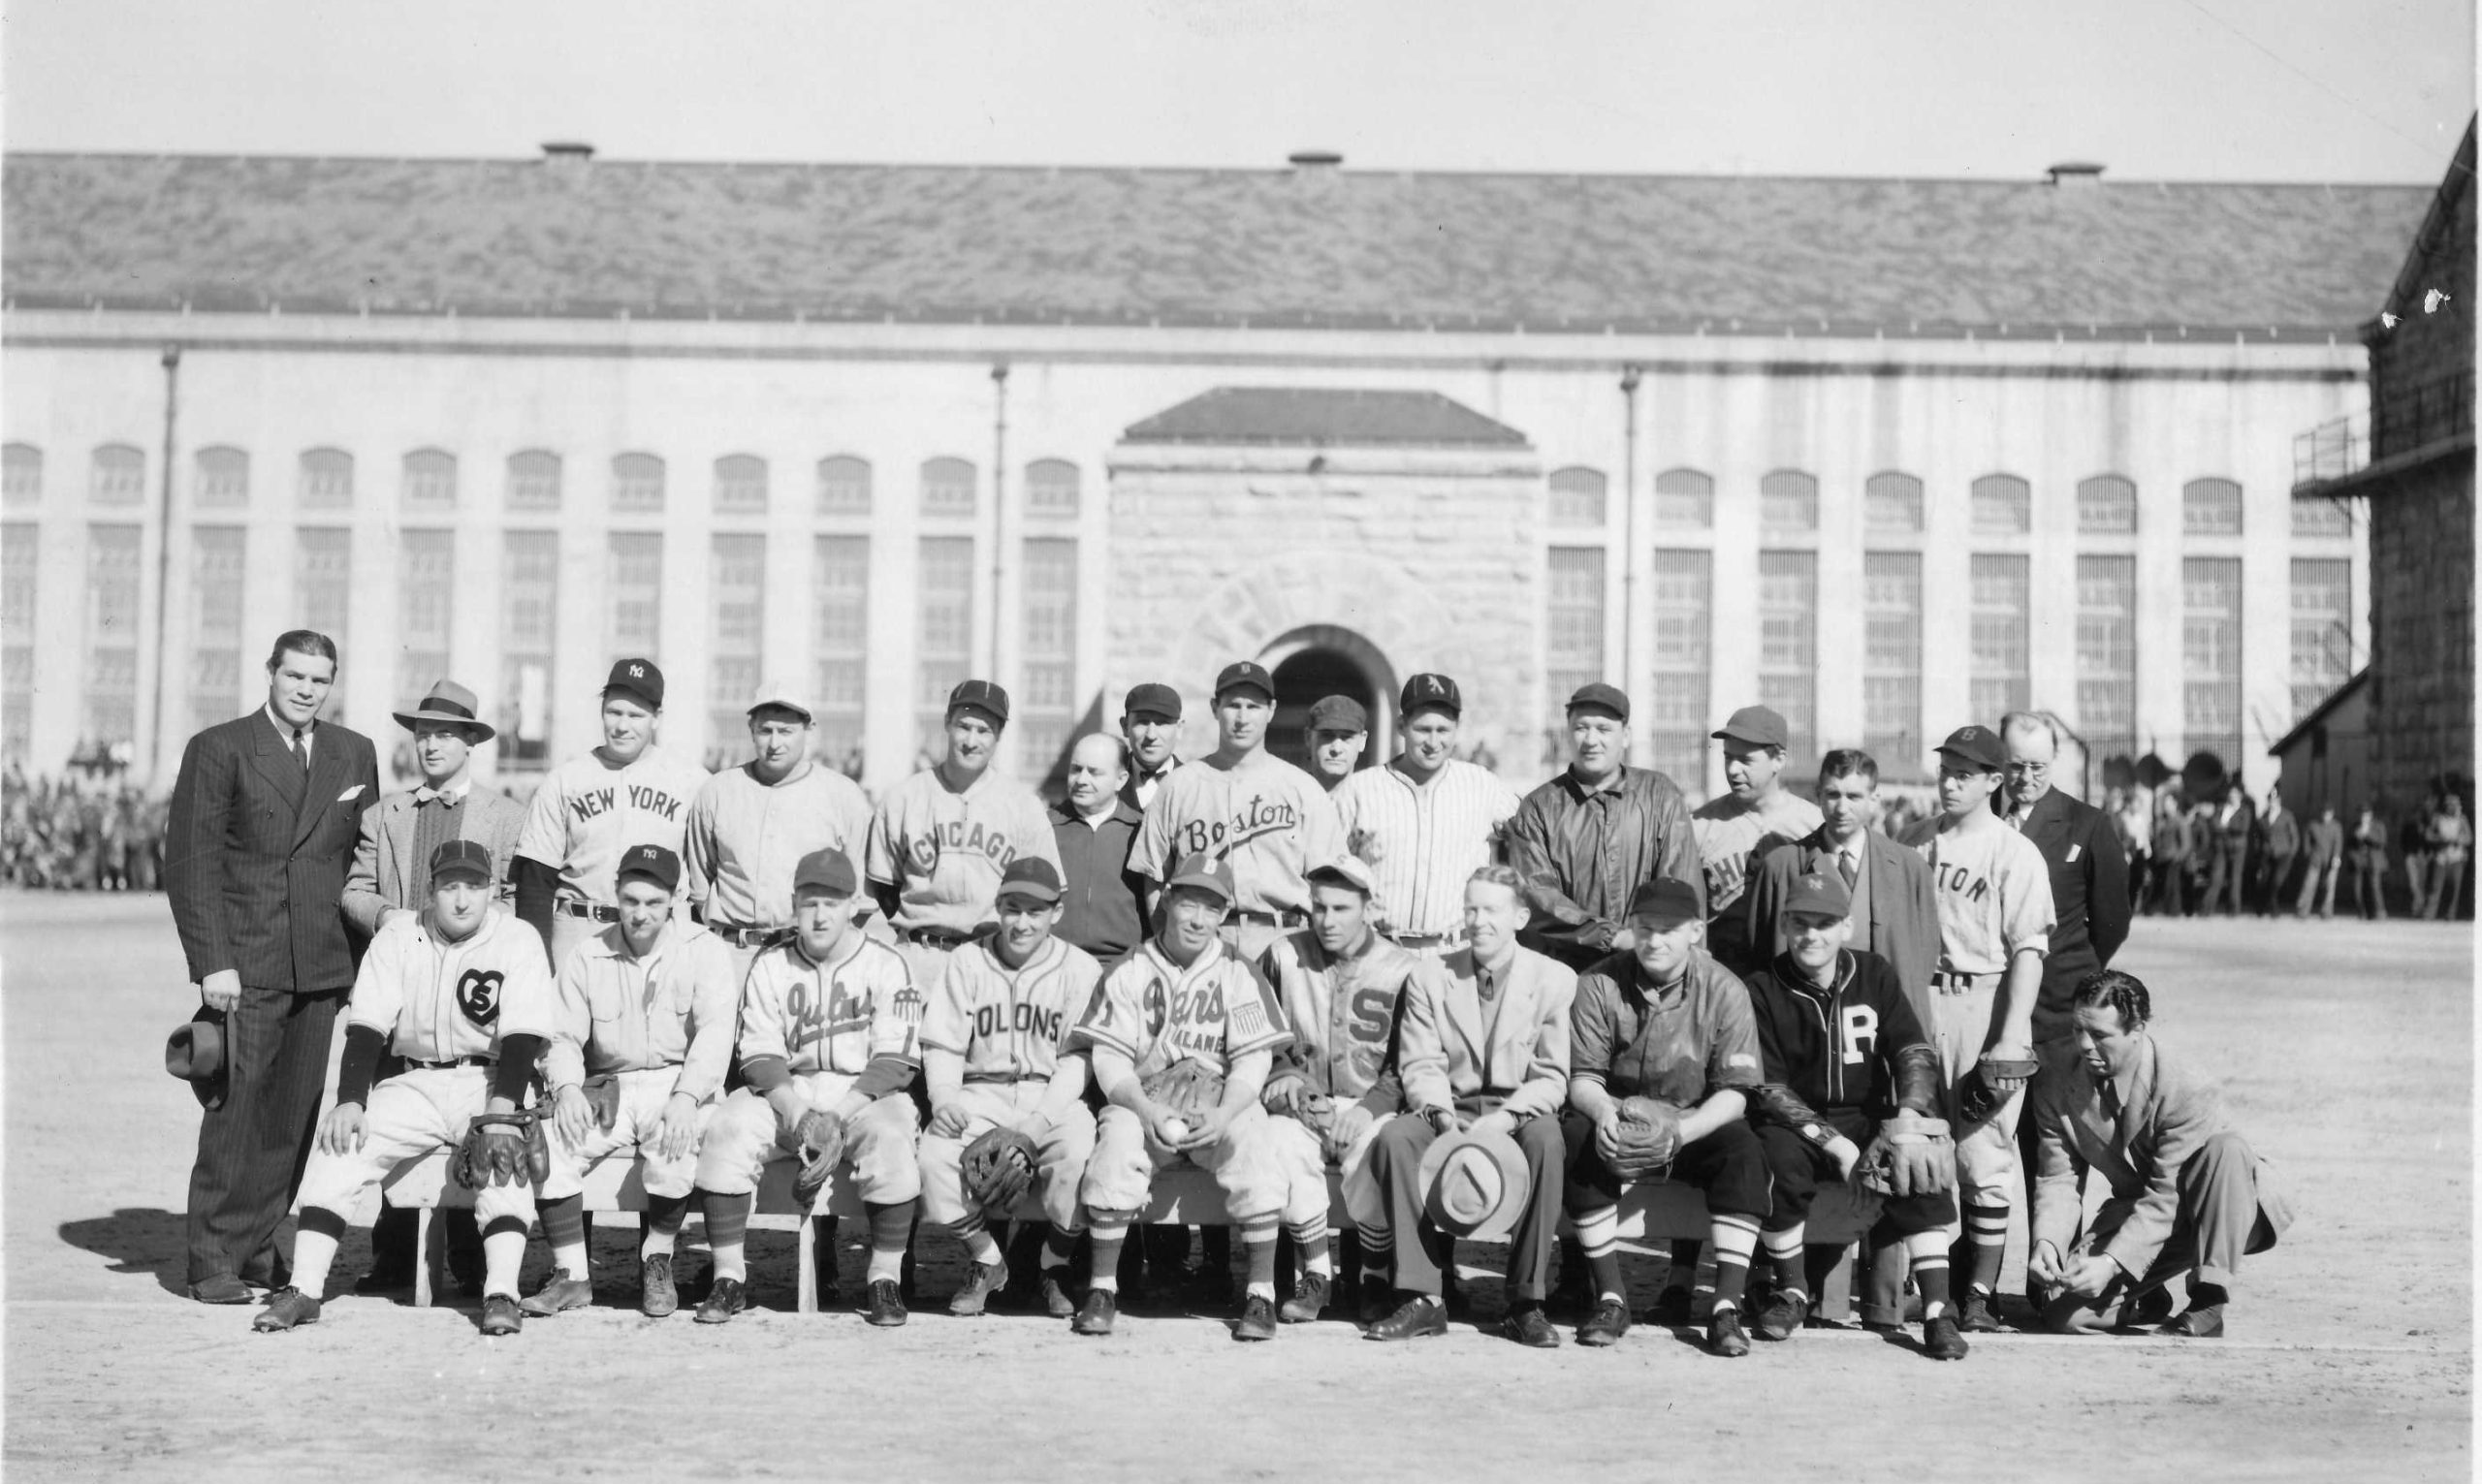 Folsom prison baseball teams around 1930s or 1940s.